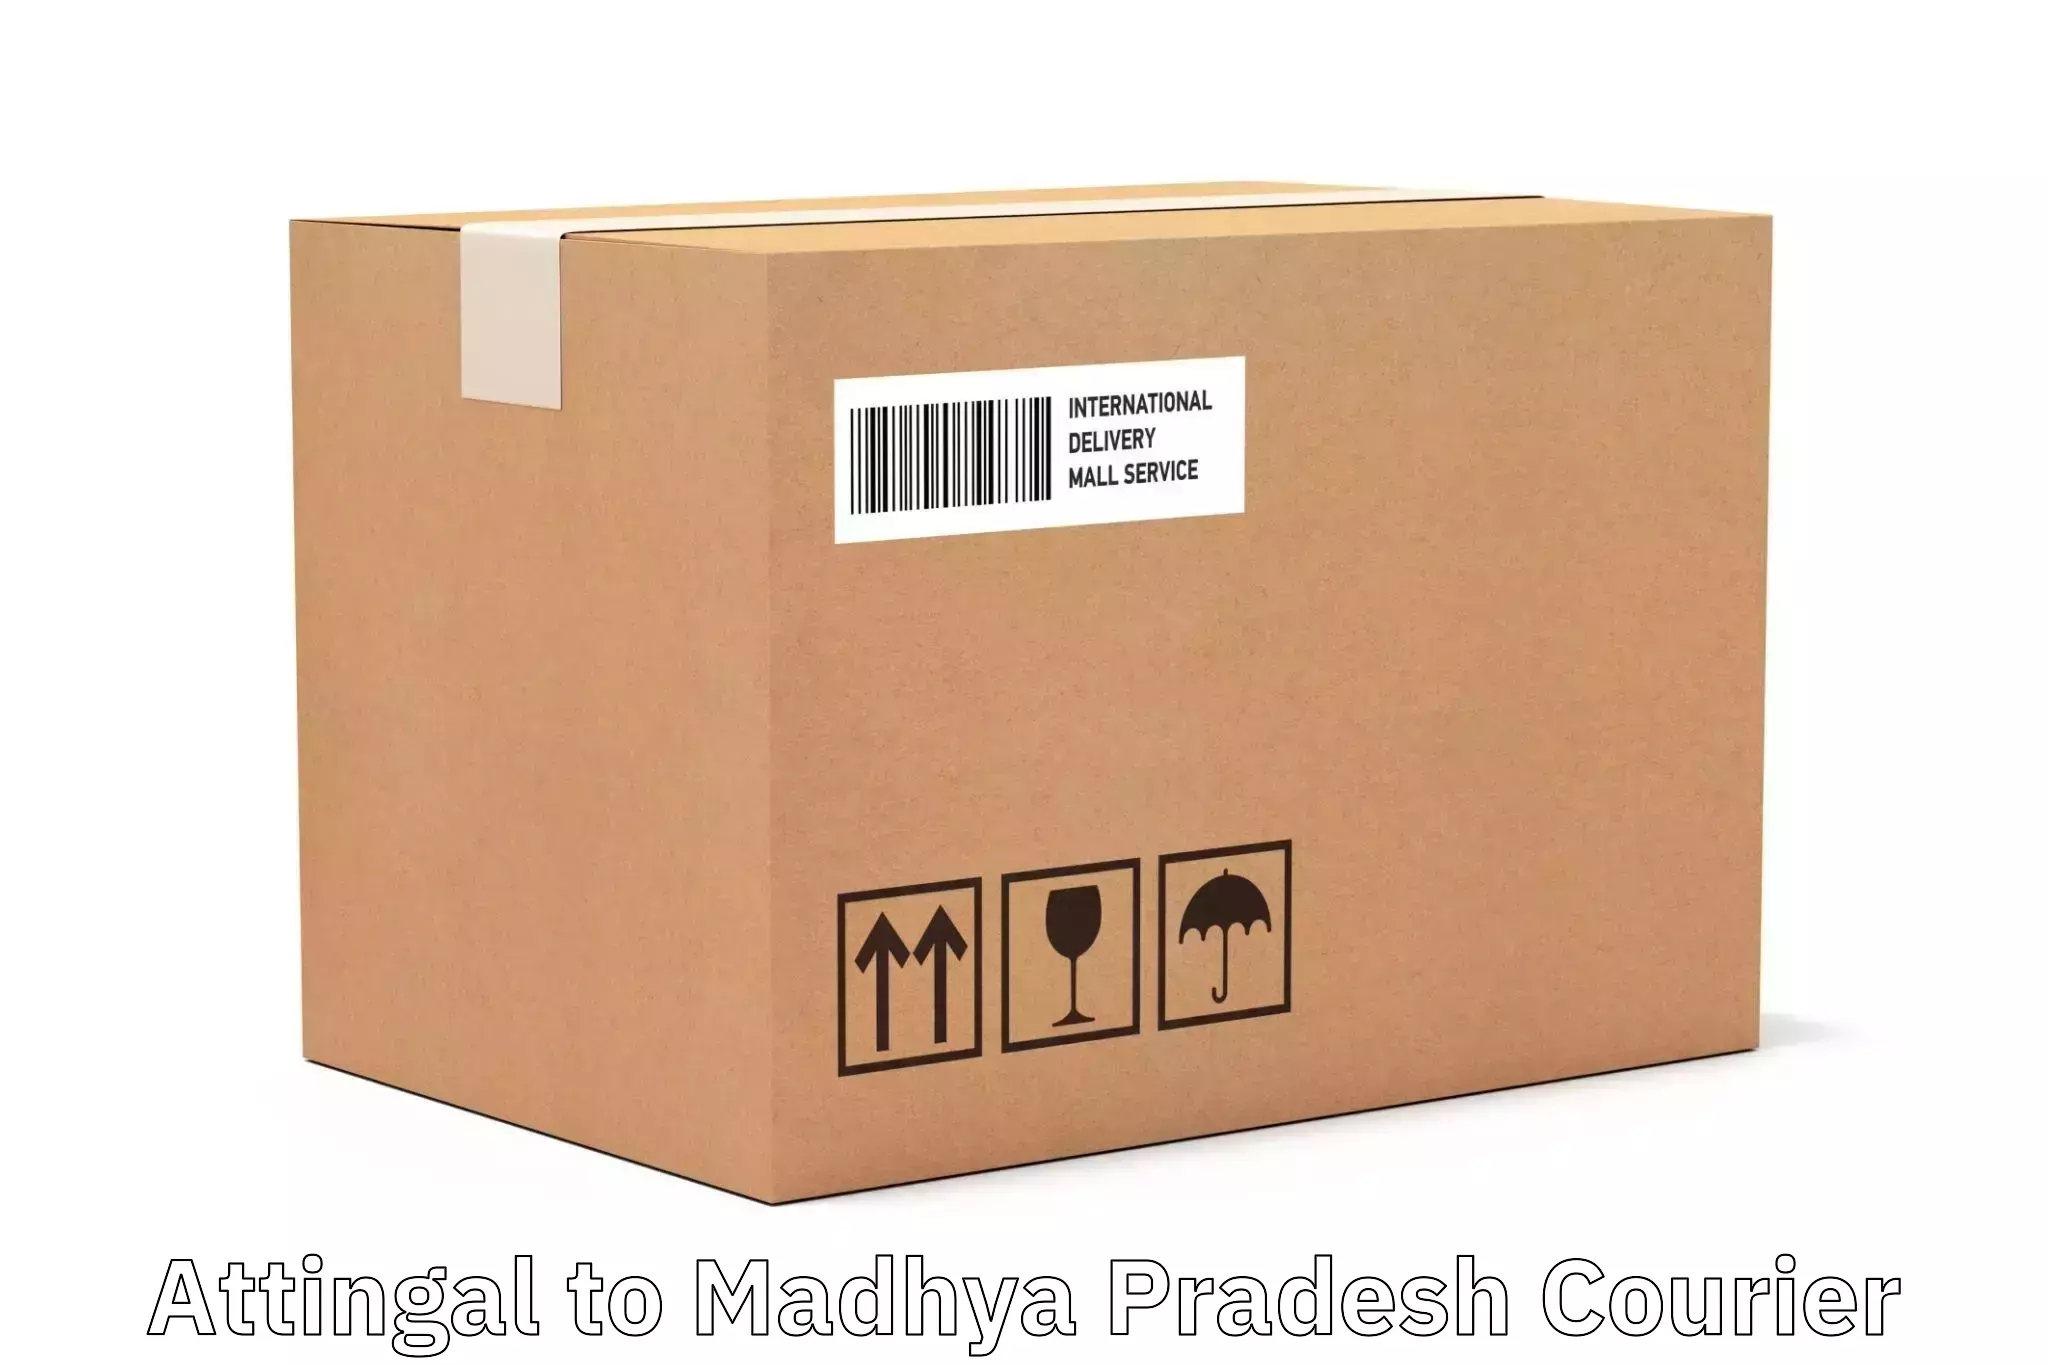 Enhanced shipping experience Attingal to Gosalpur